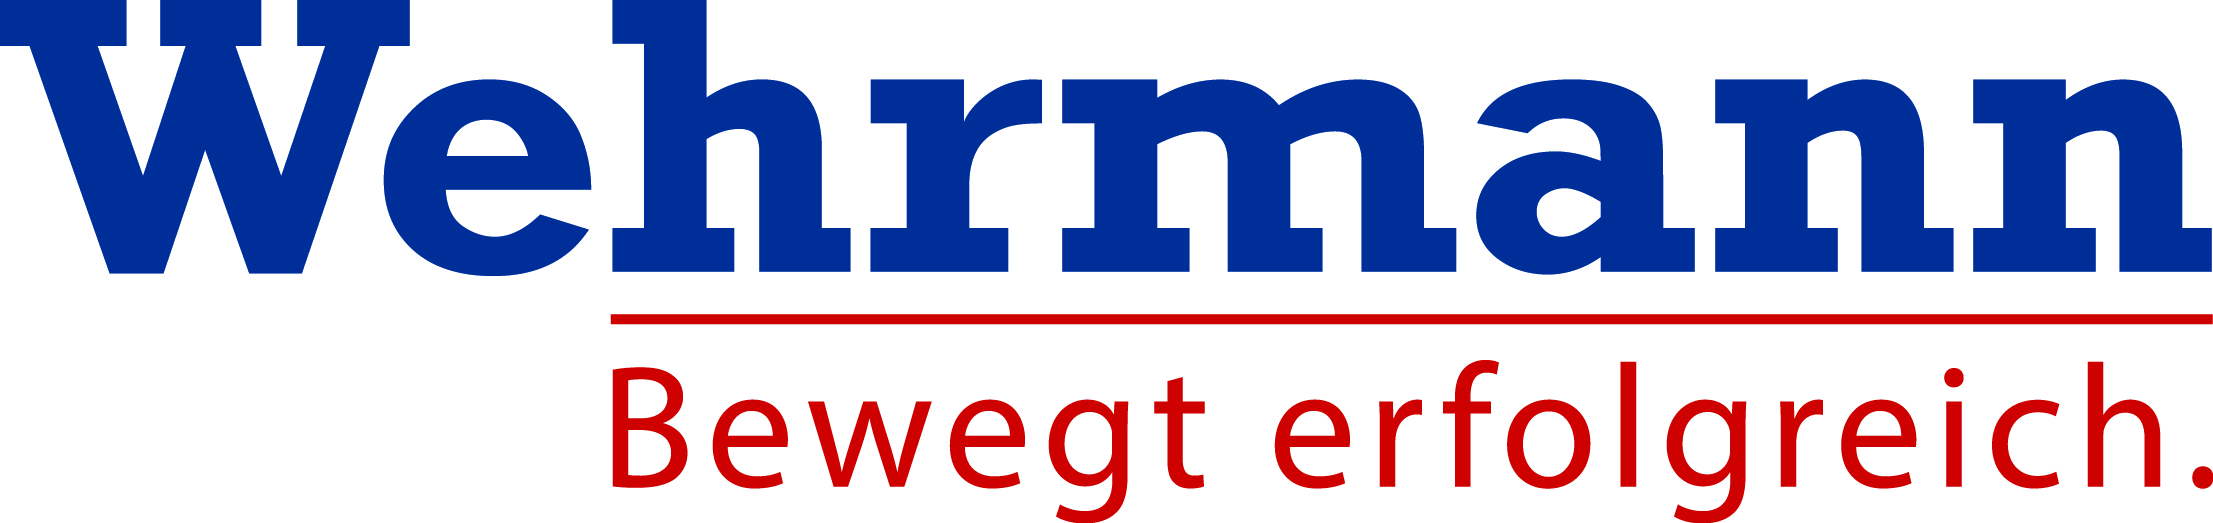 Wehrmann-Transport GmbH